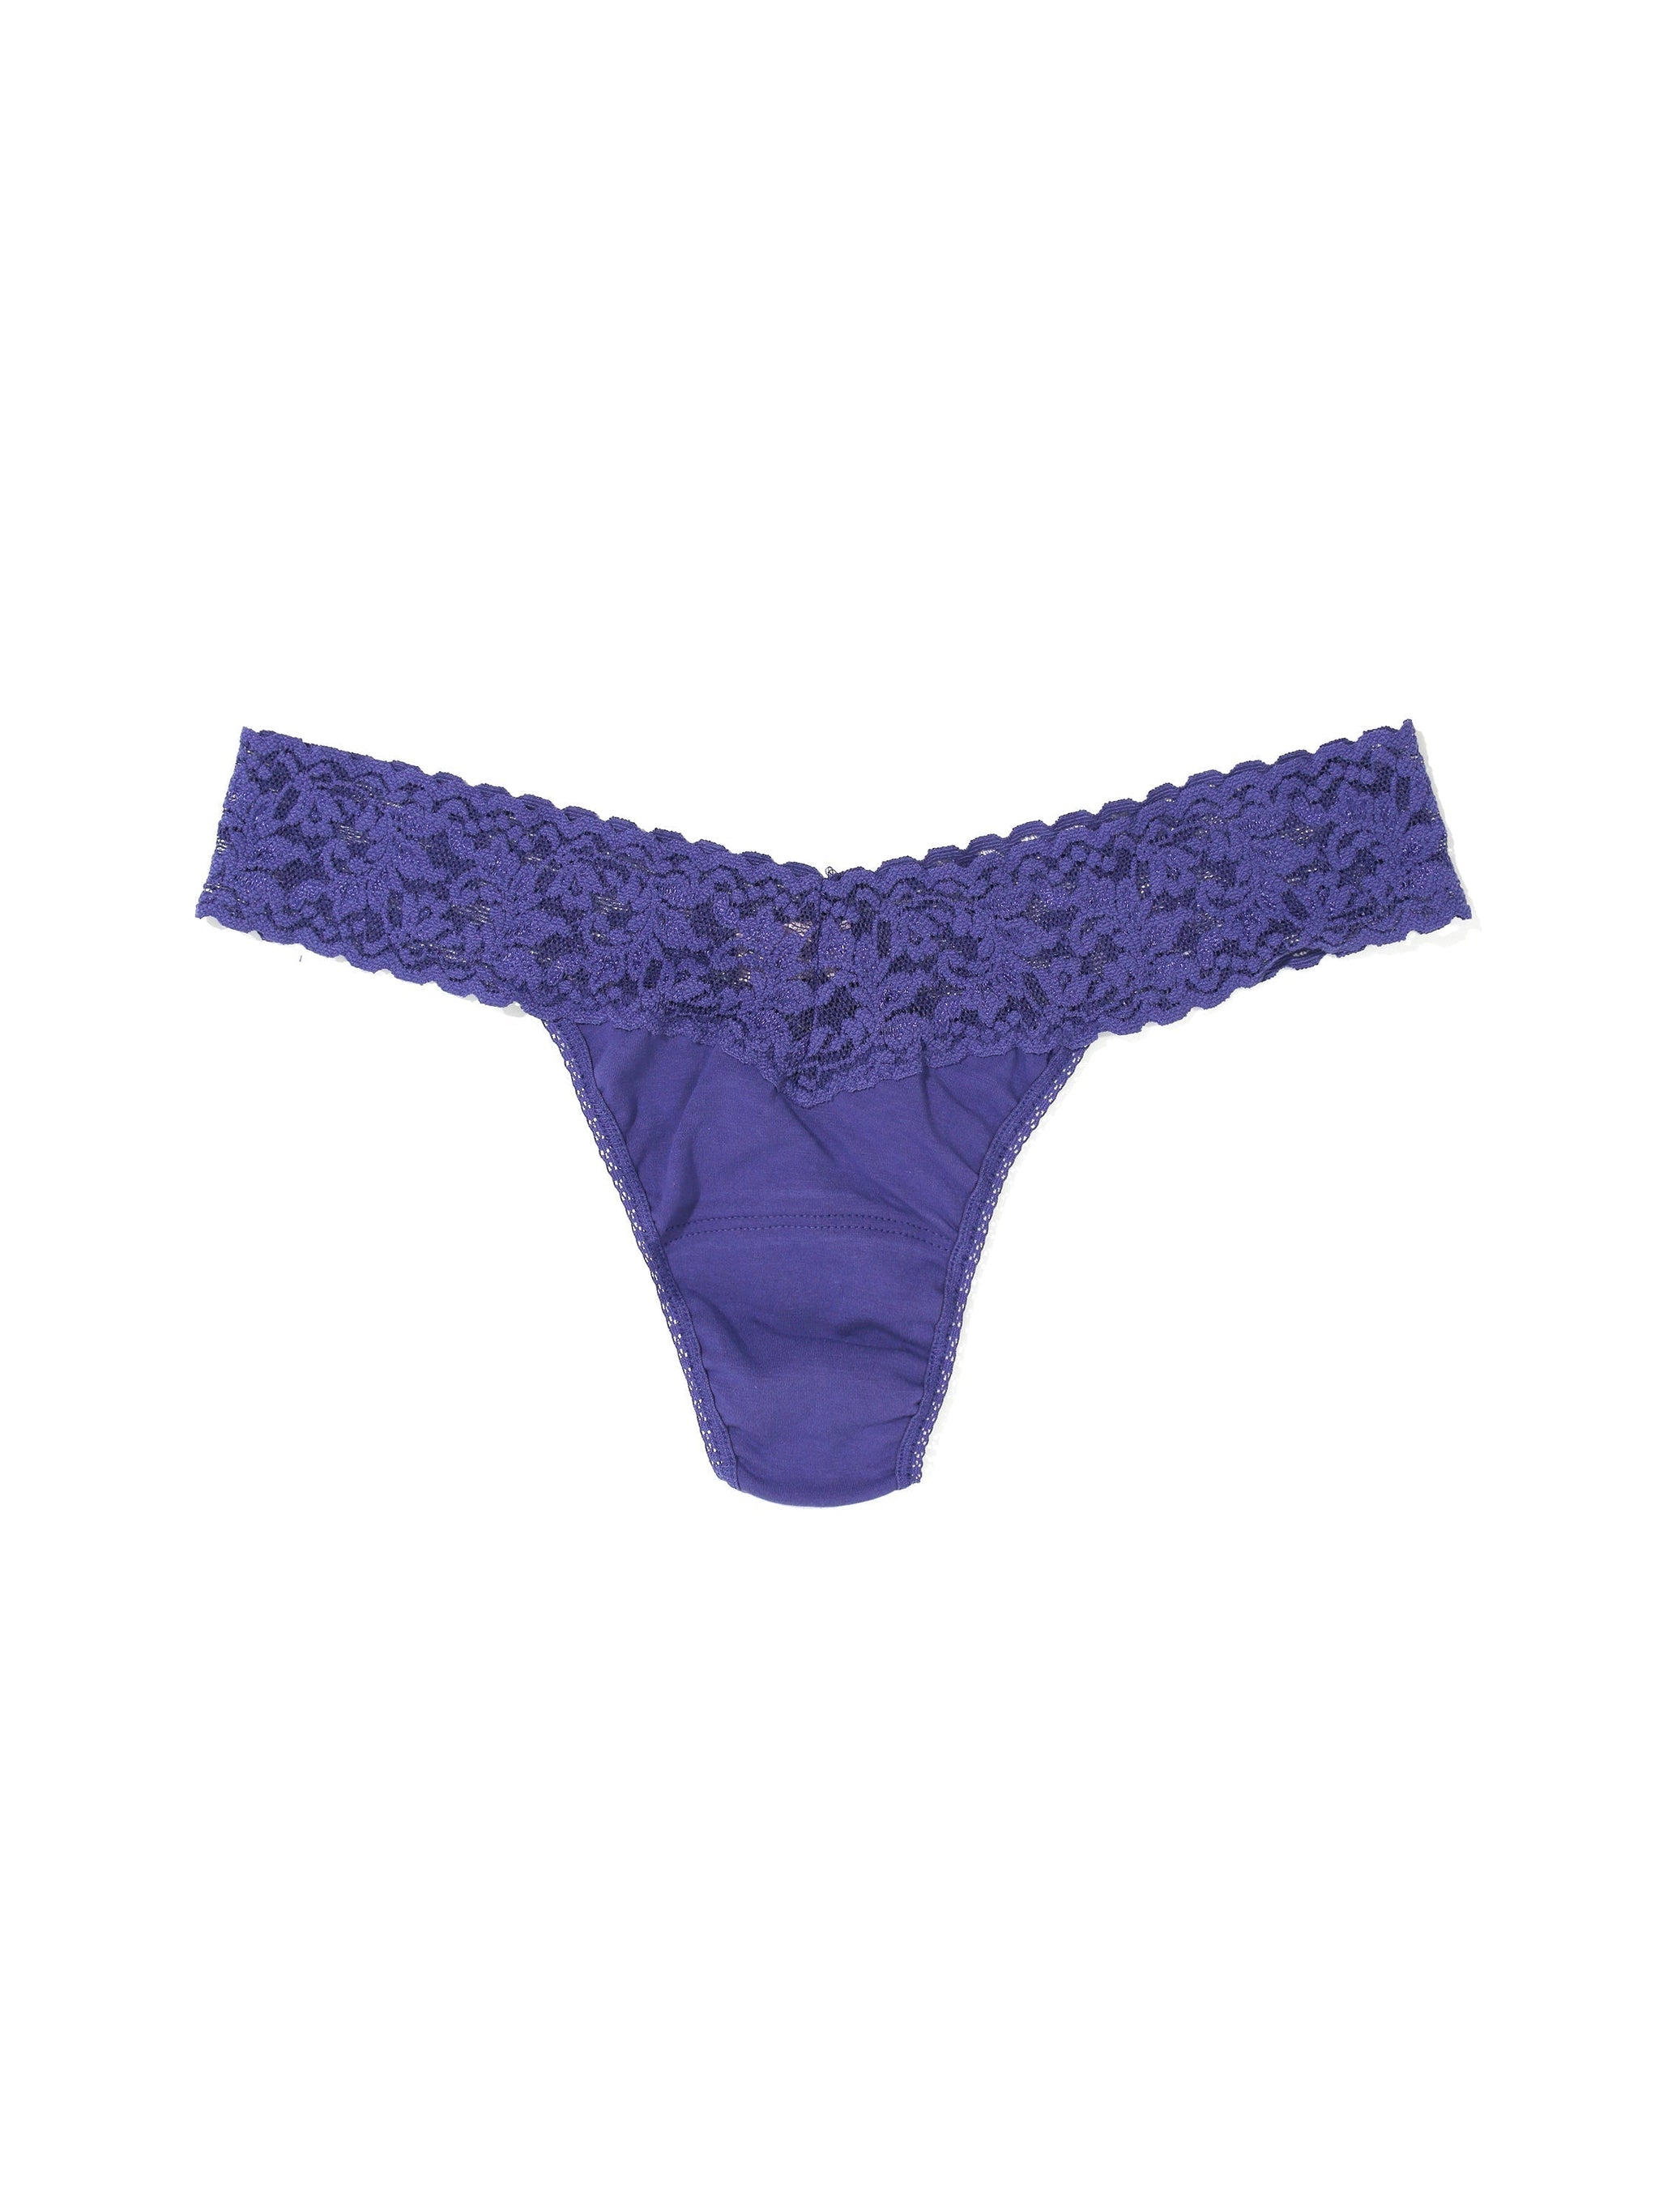 Buy Eco-Friendly Upcycled Fabric Women's Underwear - Buy on Upcycleluxe